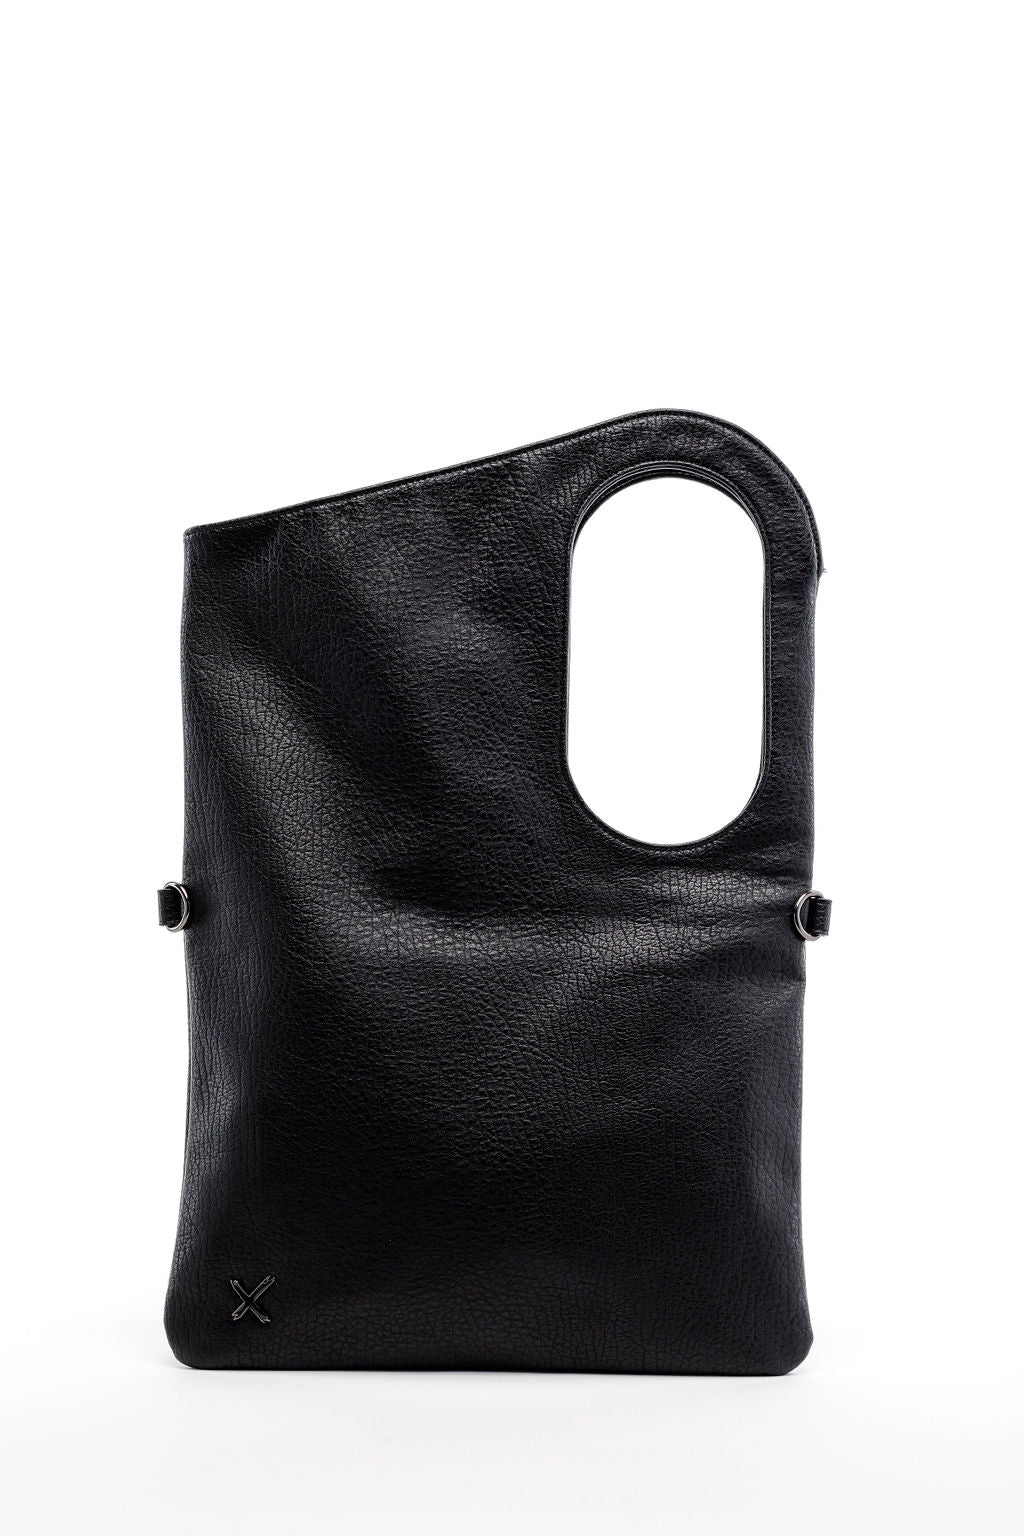 Urban Bag - Black